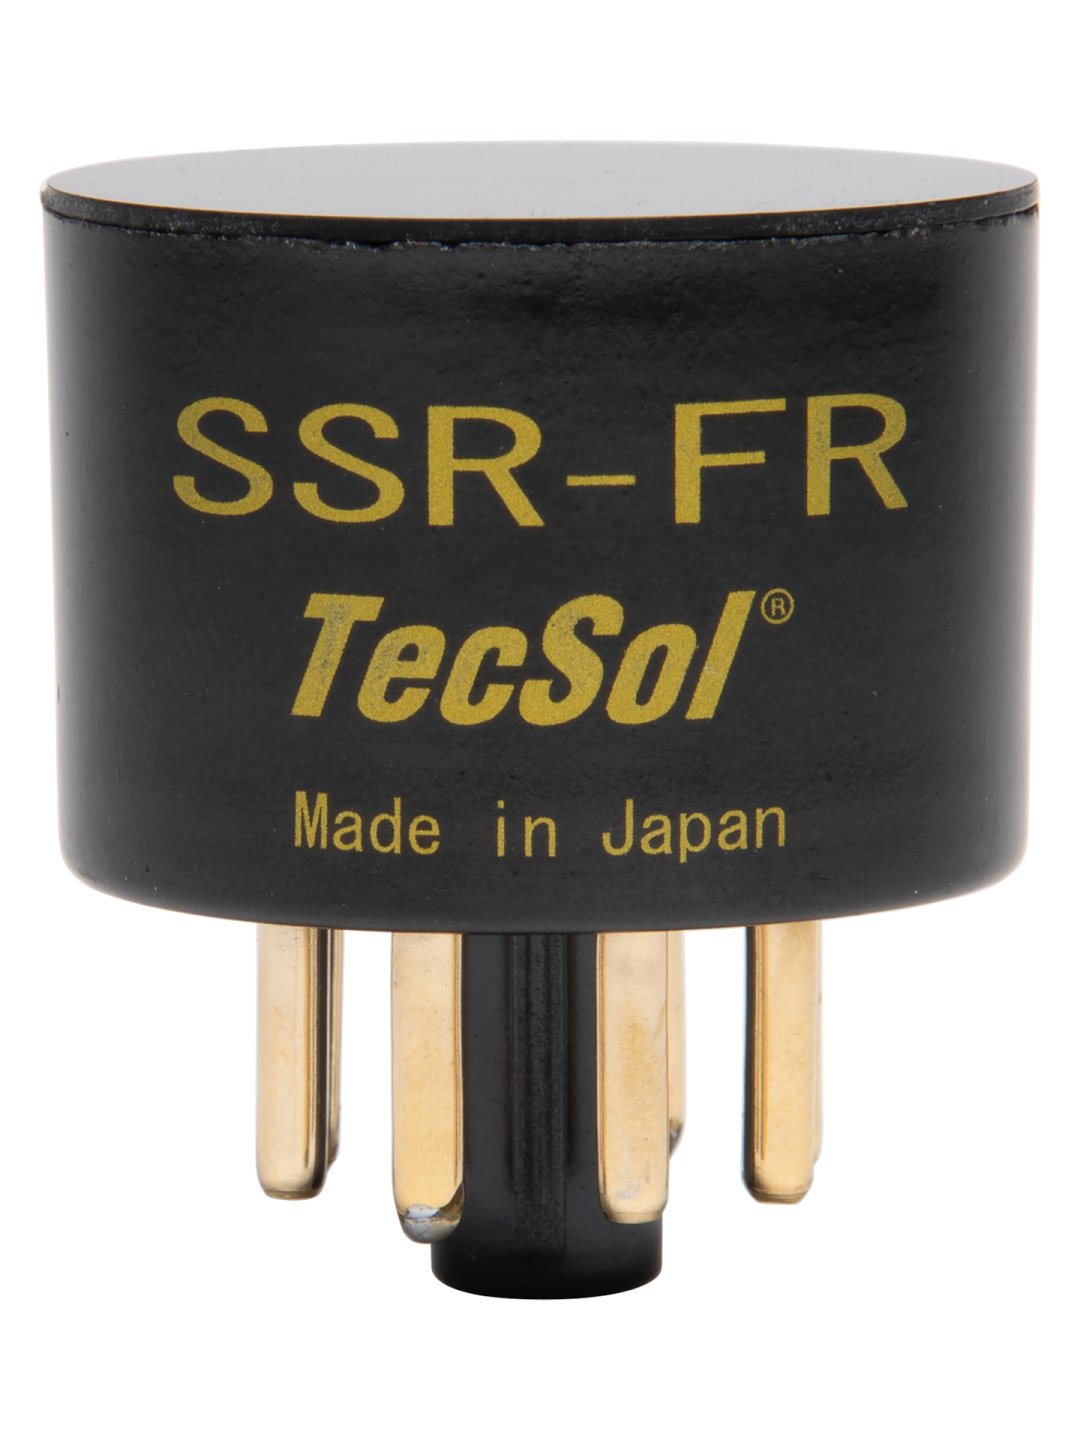 TECSOL SSR-FR - テクソル オンラインショップ | 高品質真空管 （オーディオ用・ギター用）通販・通信販売専門店